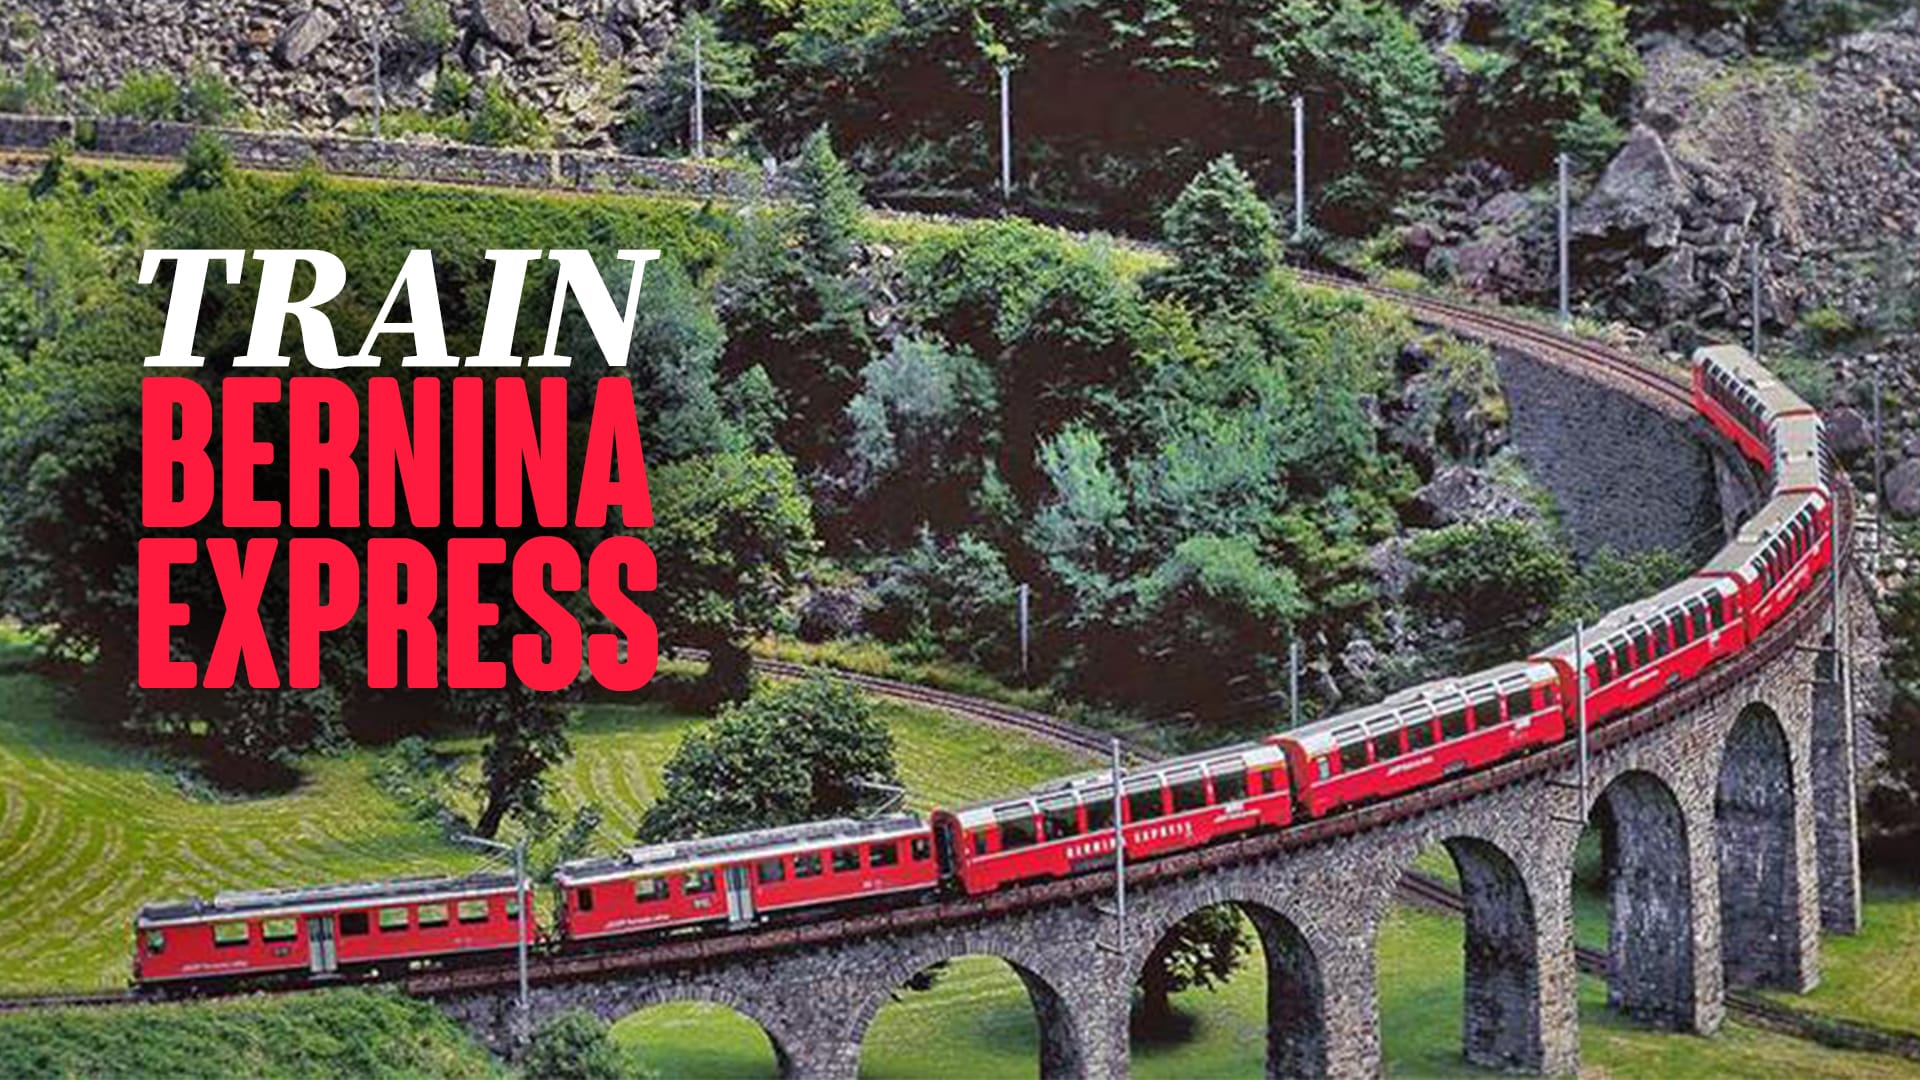 Train Bernina express